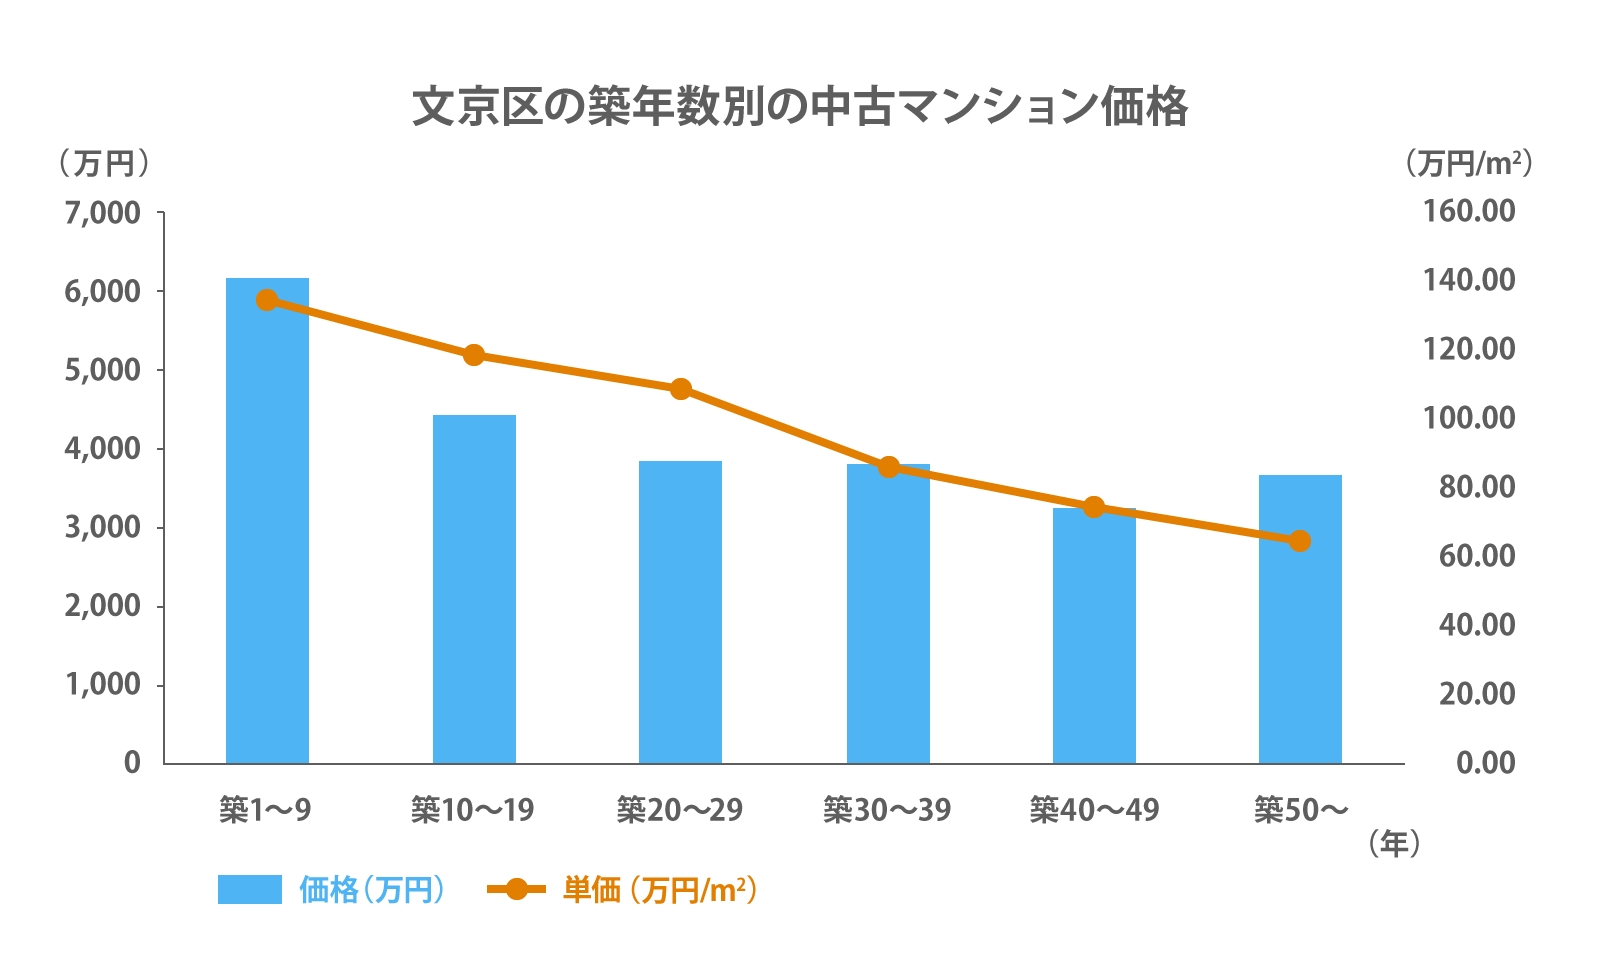 Used condominium prices by age in Bunkyo-ku, Tokyo